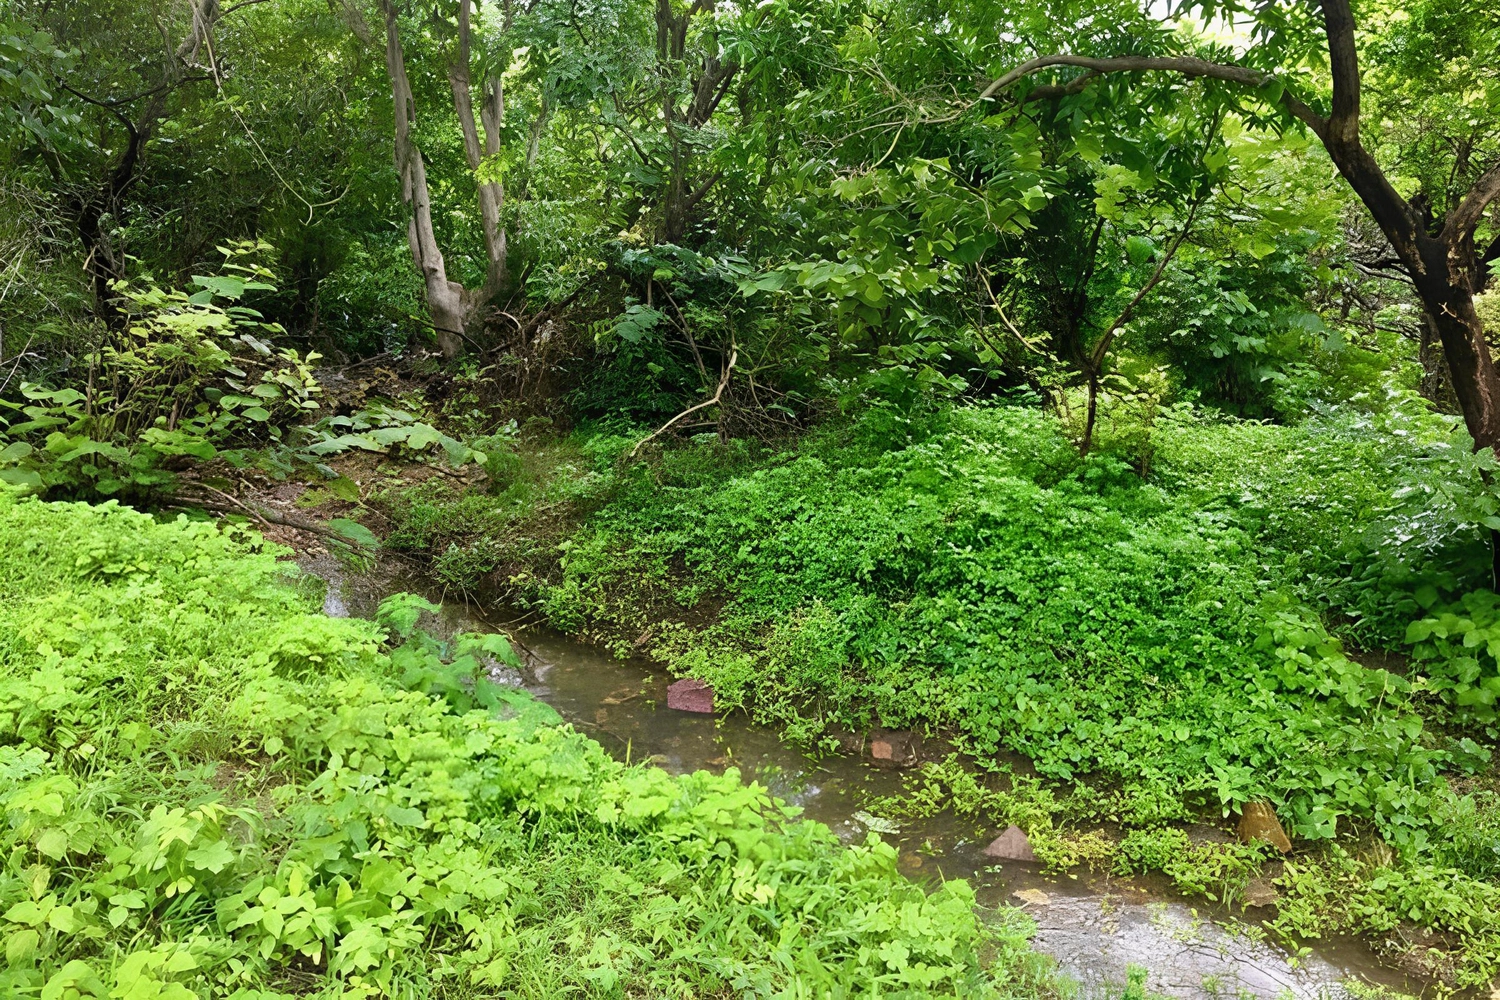 Narsapur forest trail near Hyderabad